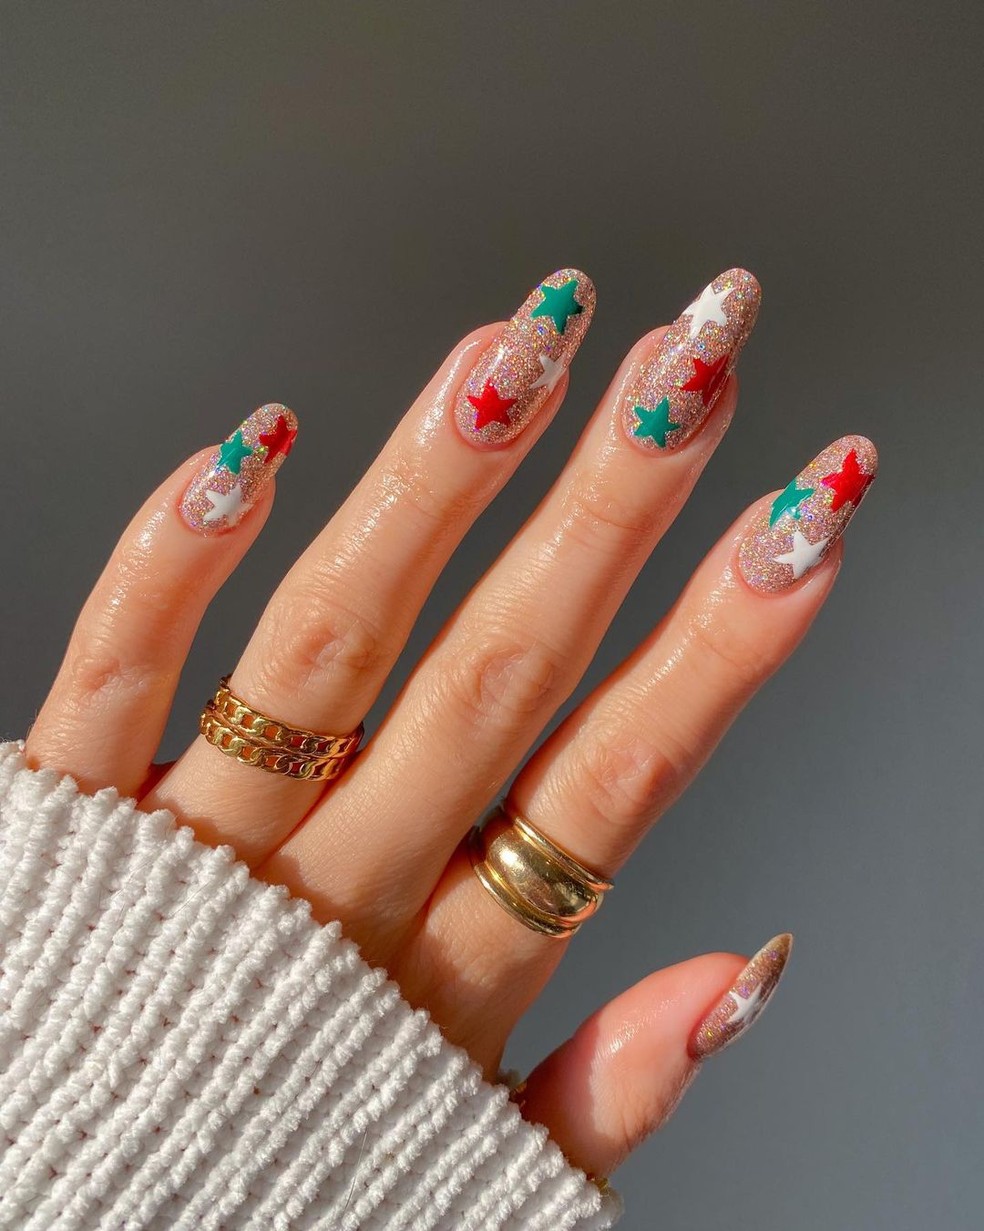 Nail art de Natal e Ano Novo — Foto: Instagram